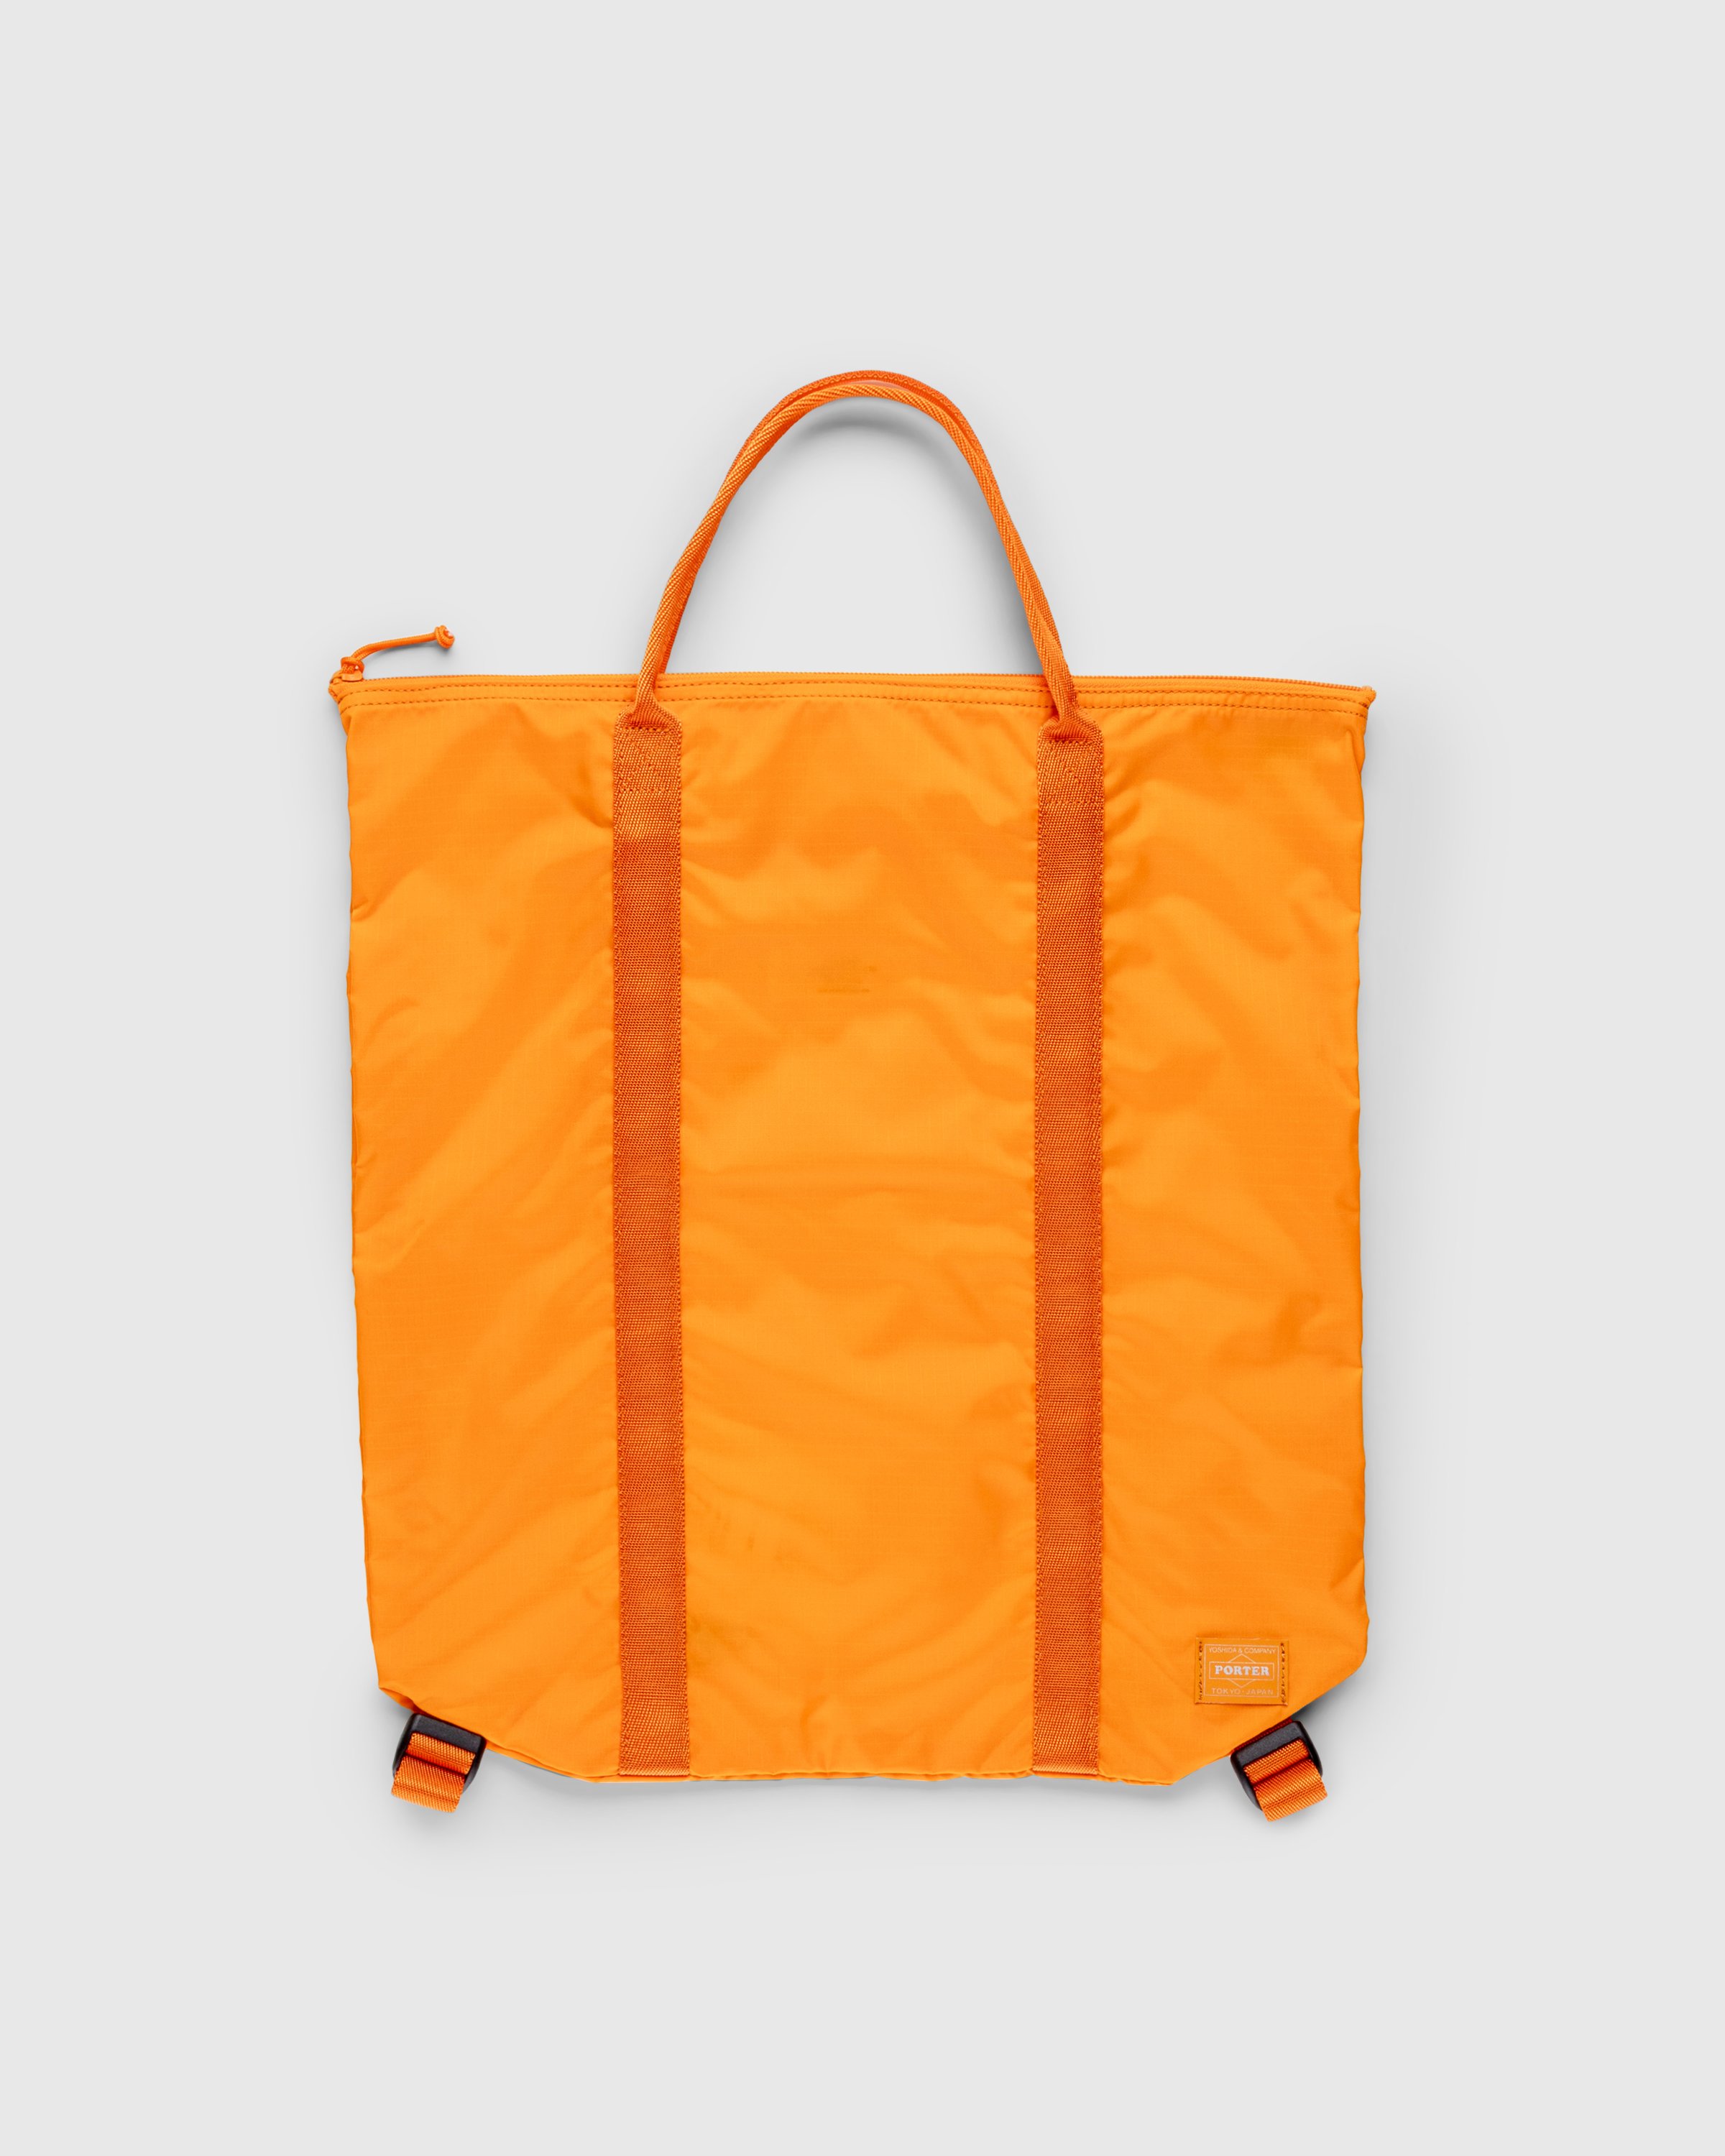 Porter-Yoshida & Co. - Flex 2-Way Tote Bag Orange - Accessories - Orange - Image 1